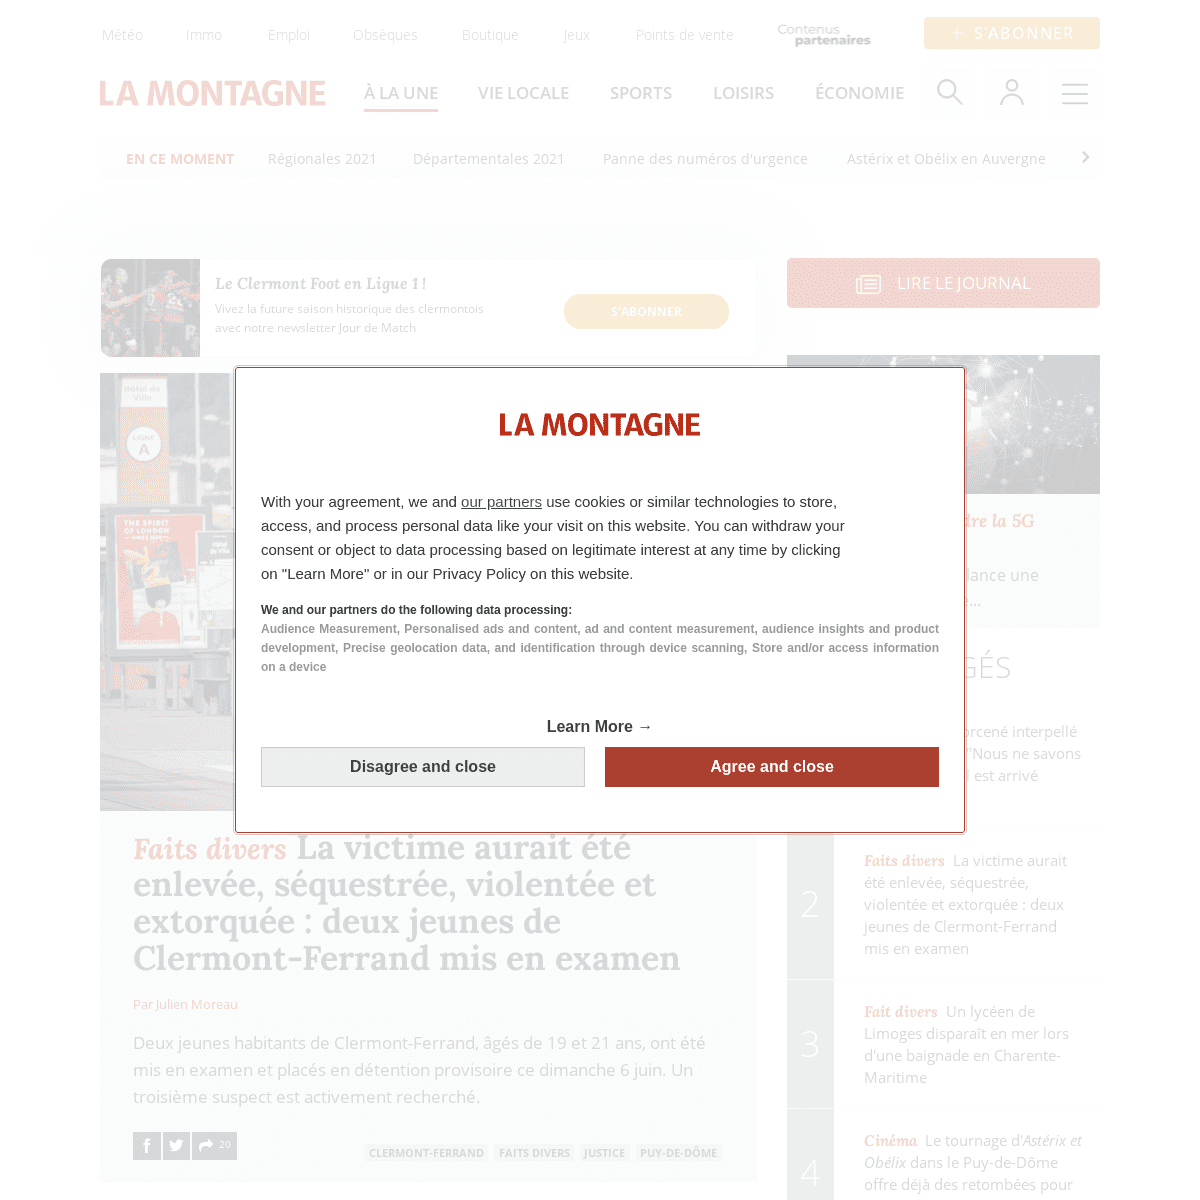 A complete backup of https://lamontagne.fr